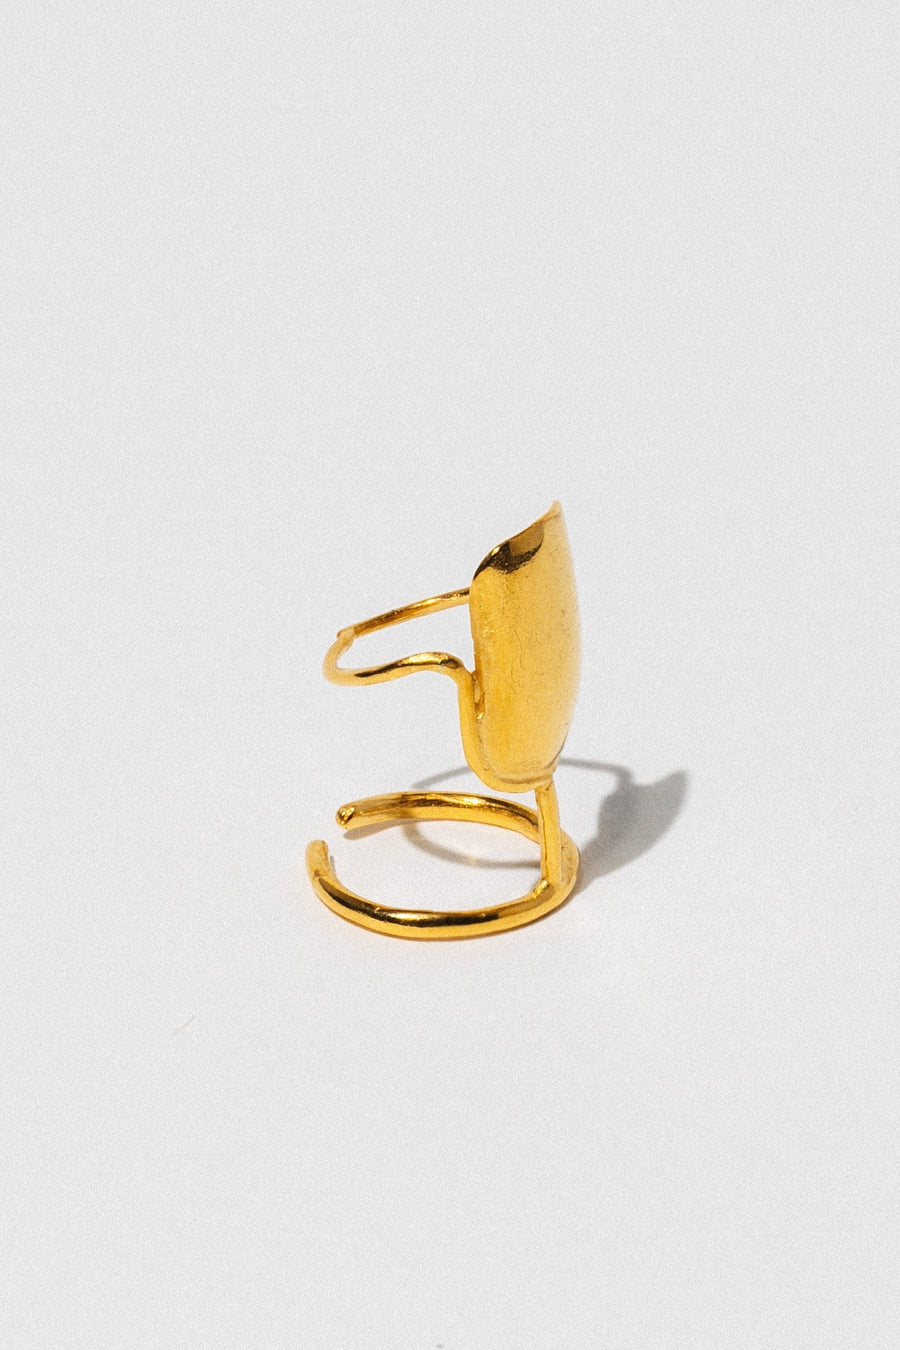 Aziza Handcrafted Jewelry Bastet Ring